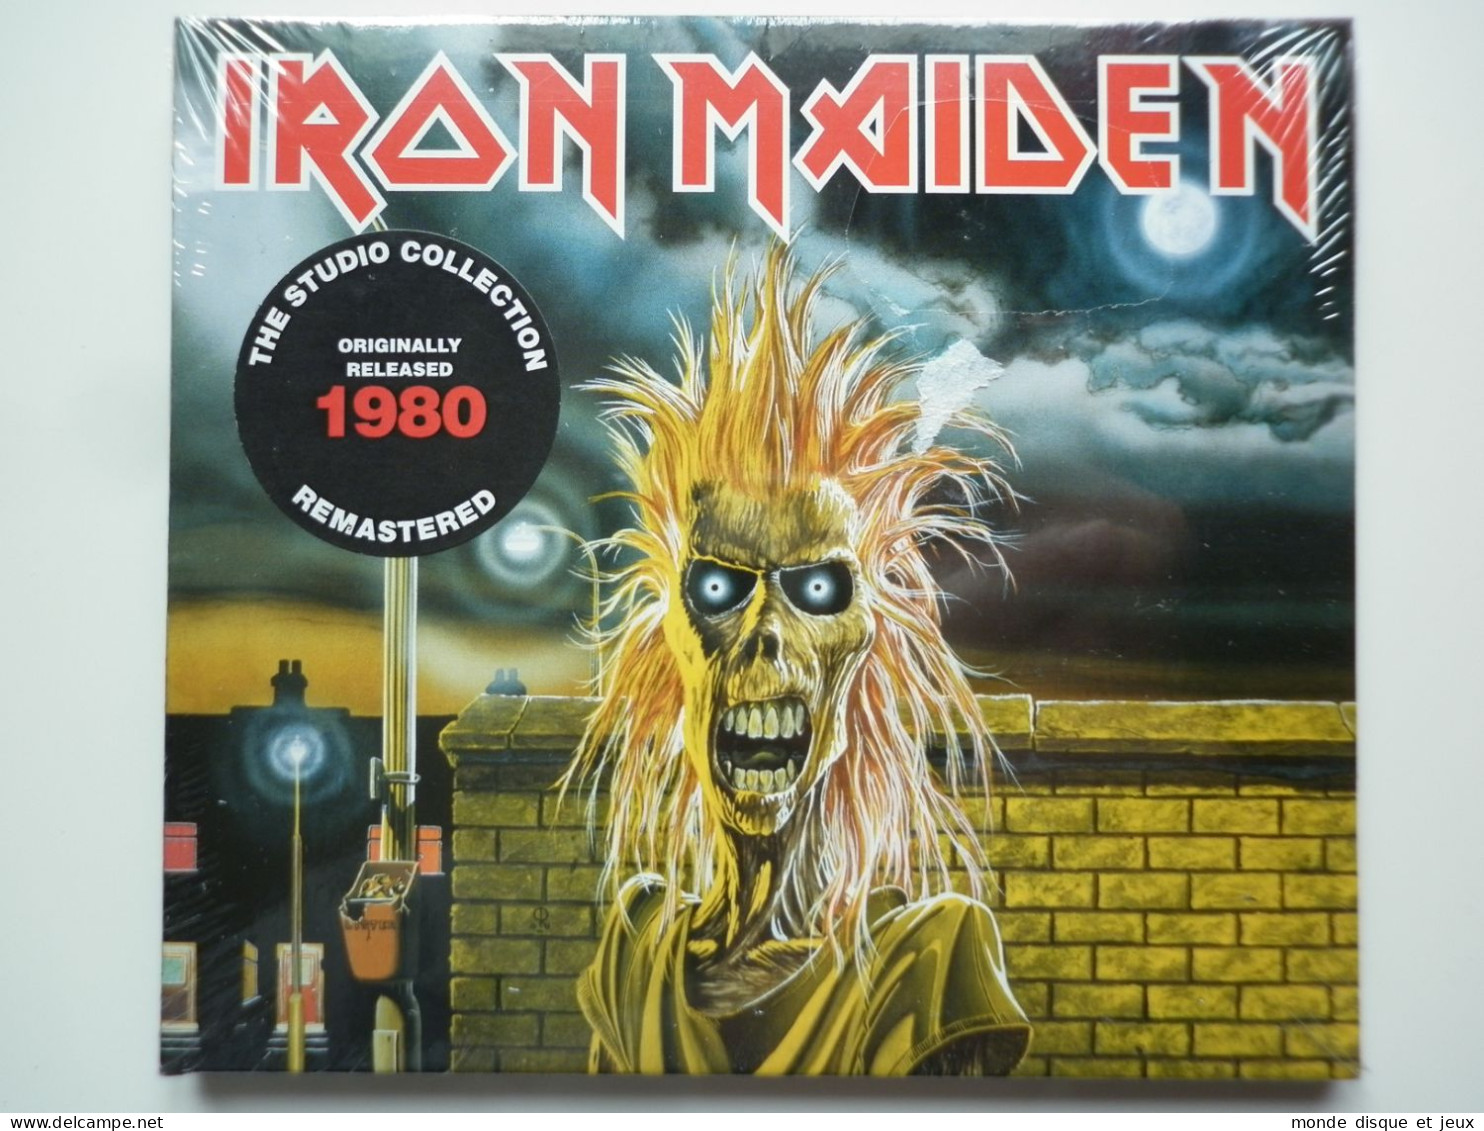 Iron Maiden Cd Album Digipack Iron Maiden - Autres - Musique Française